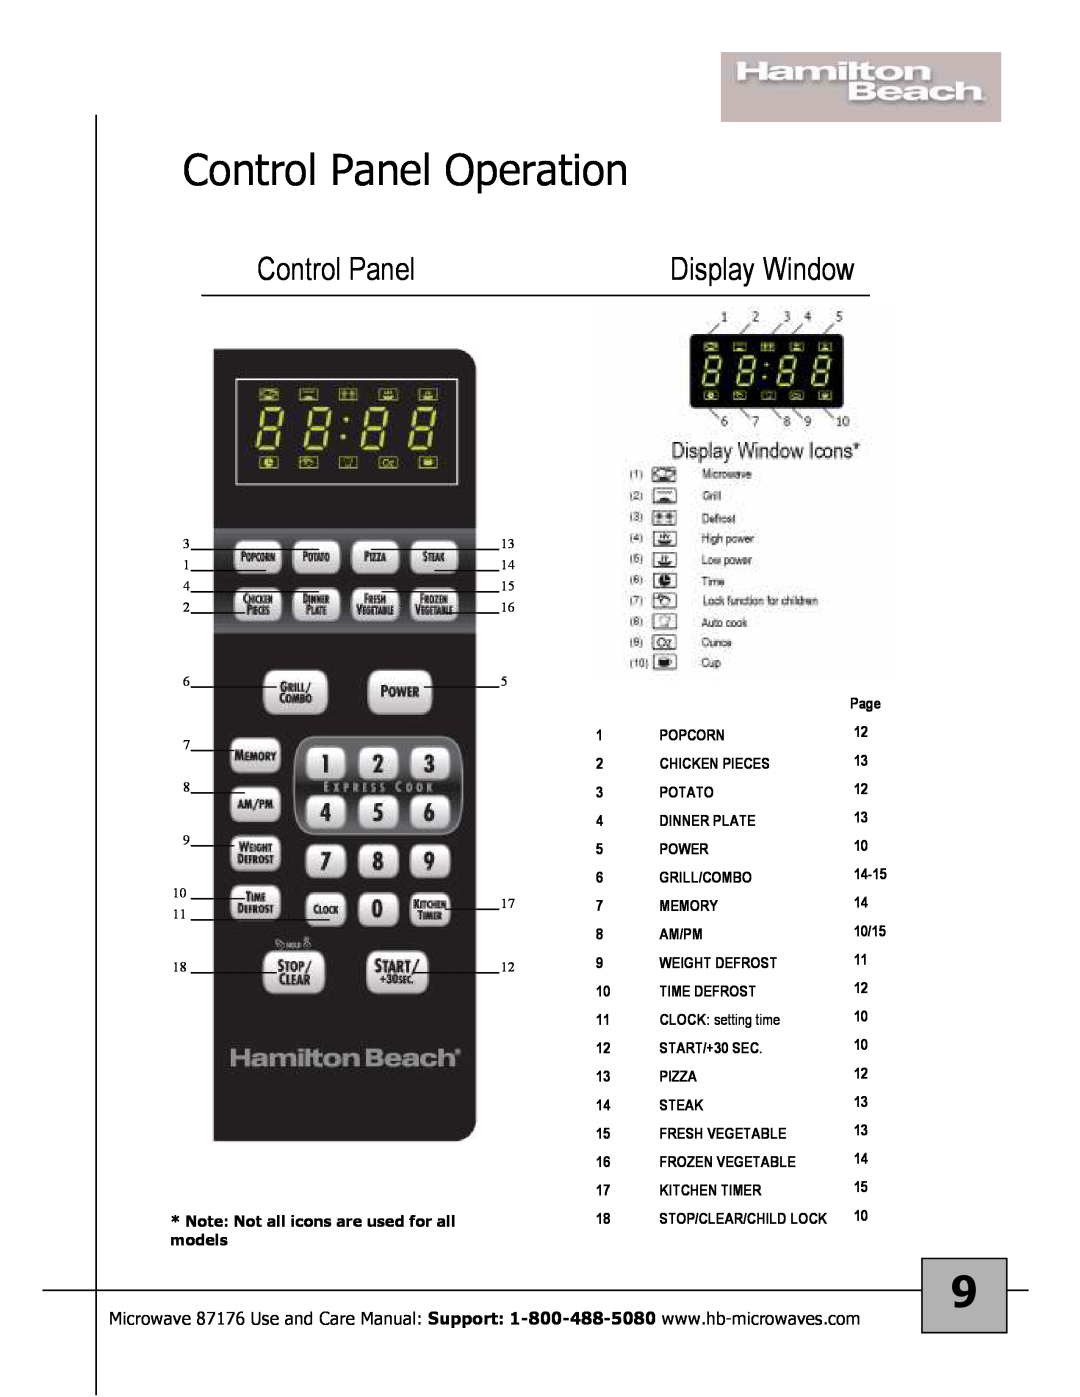 Hamilton Beach 87176 owner manual Control Panel Operation, Display Window 